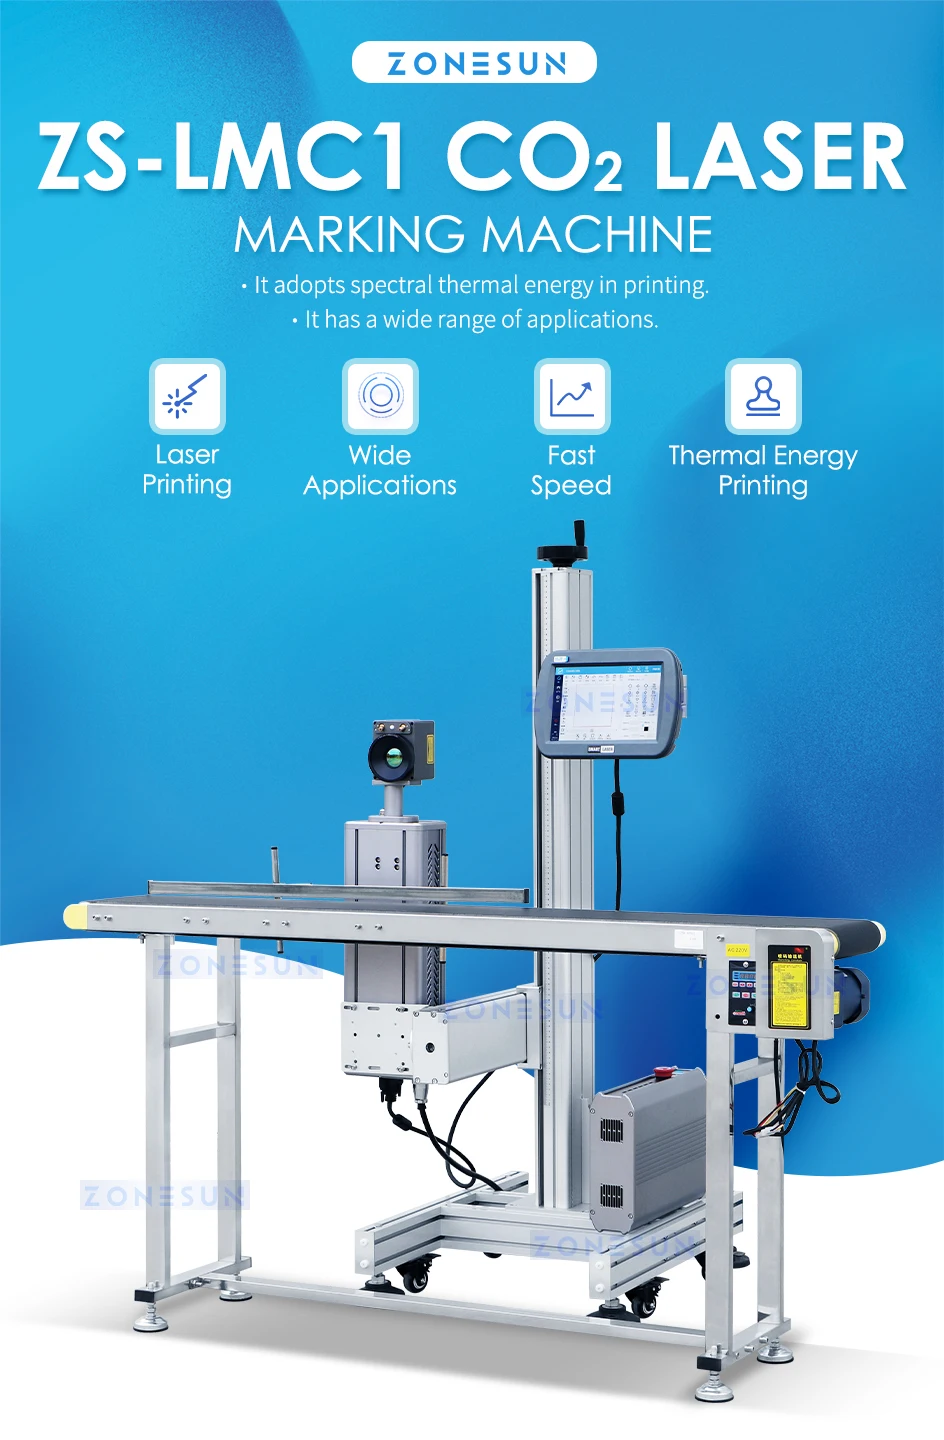 ZONESUN ZS-LMC1 Automatic CO₂ Laser Date Code Printing Machine